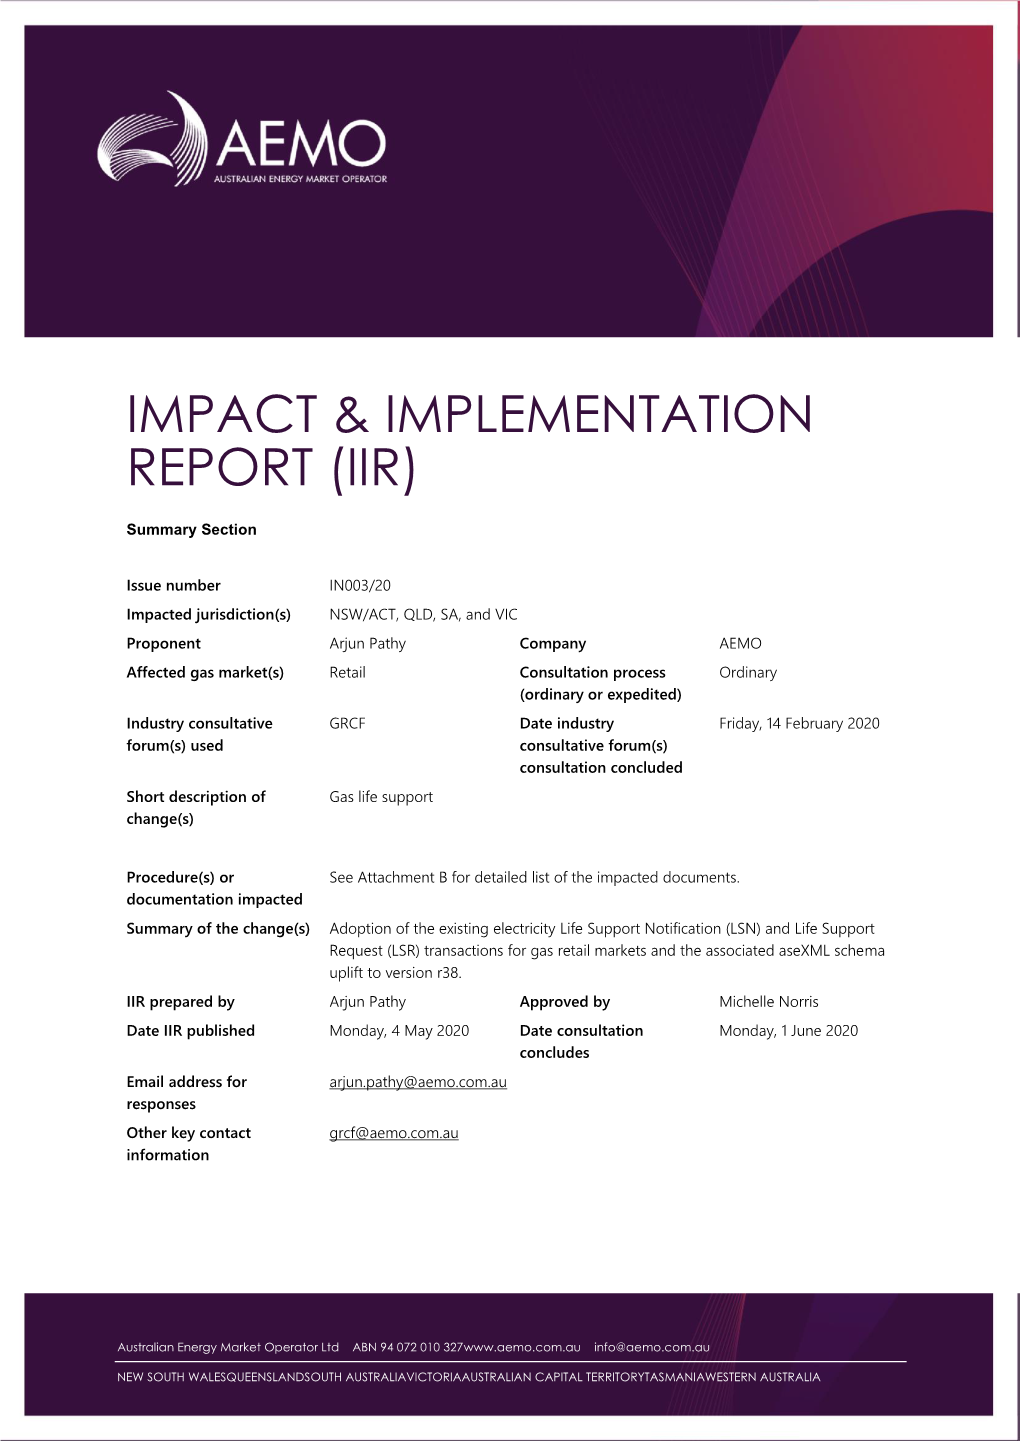 Impact & Implementation Report (Iir)